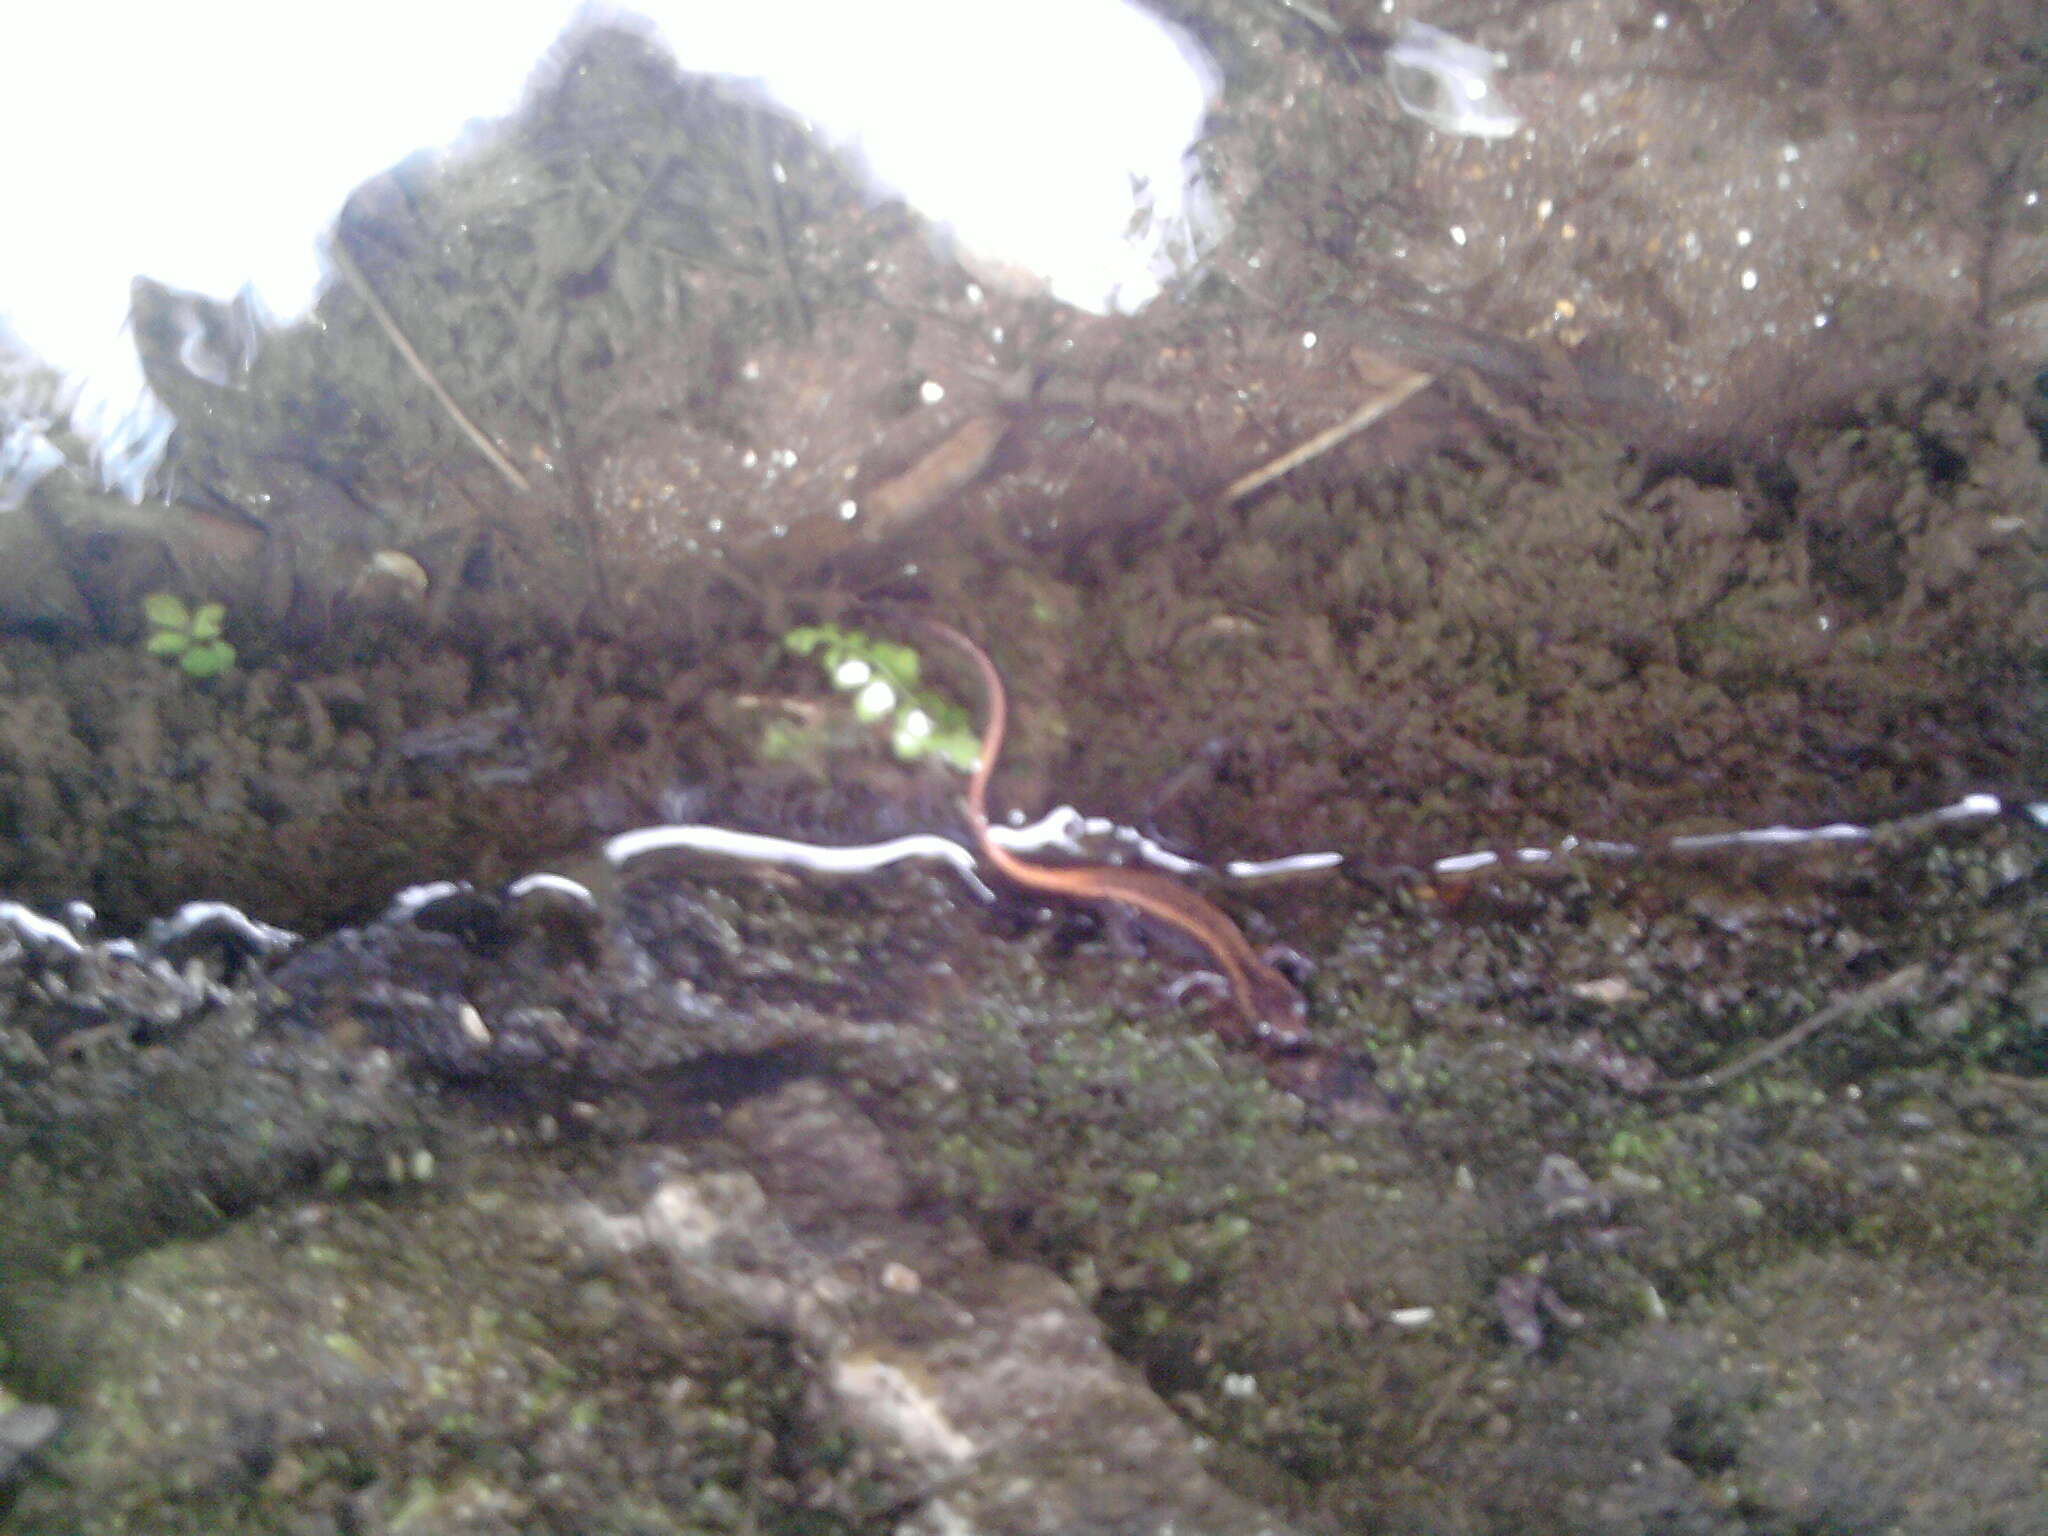 Image of Gold-striped salamander